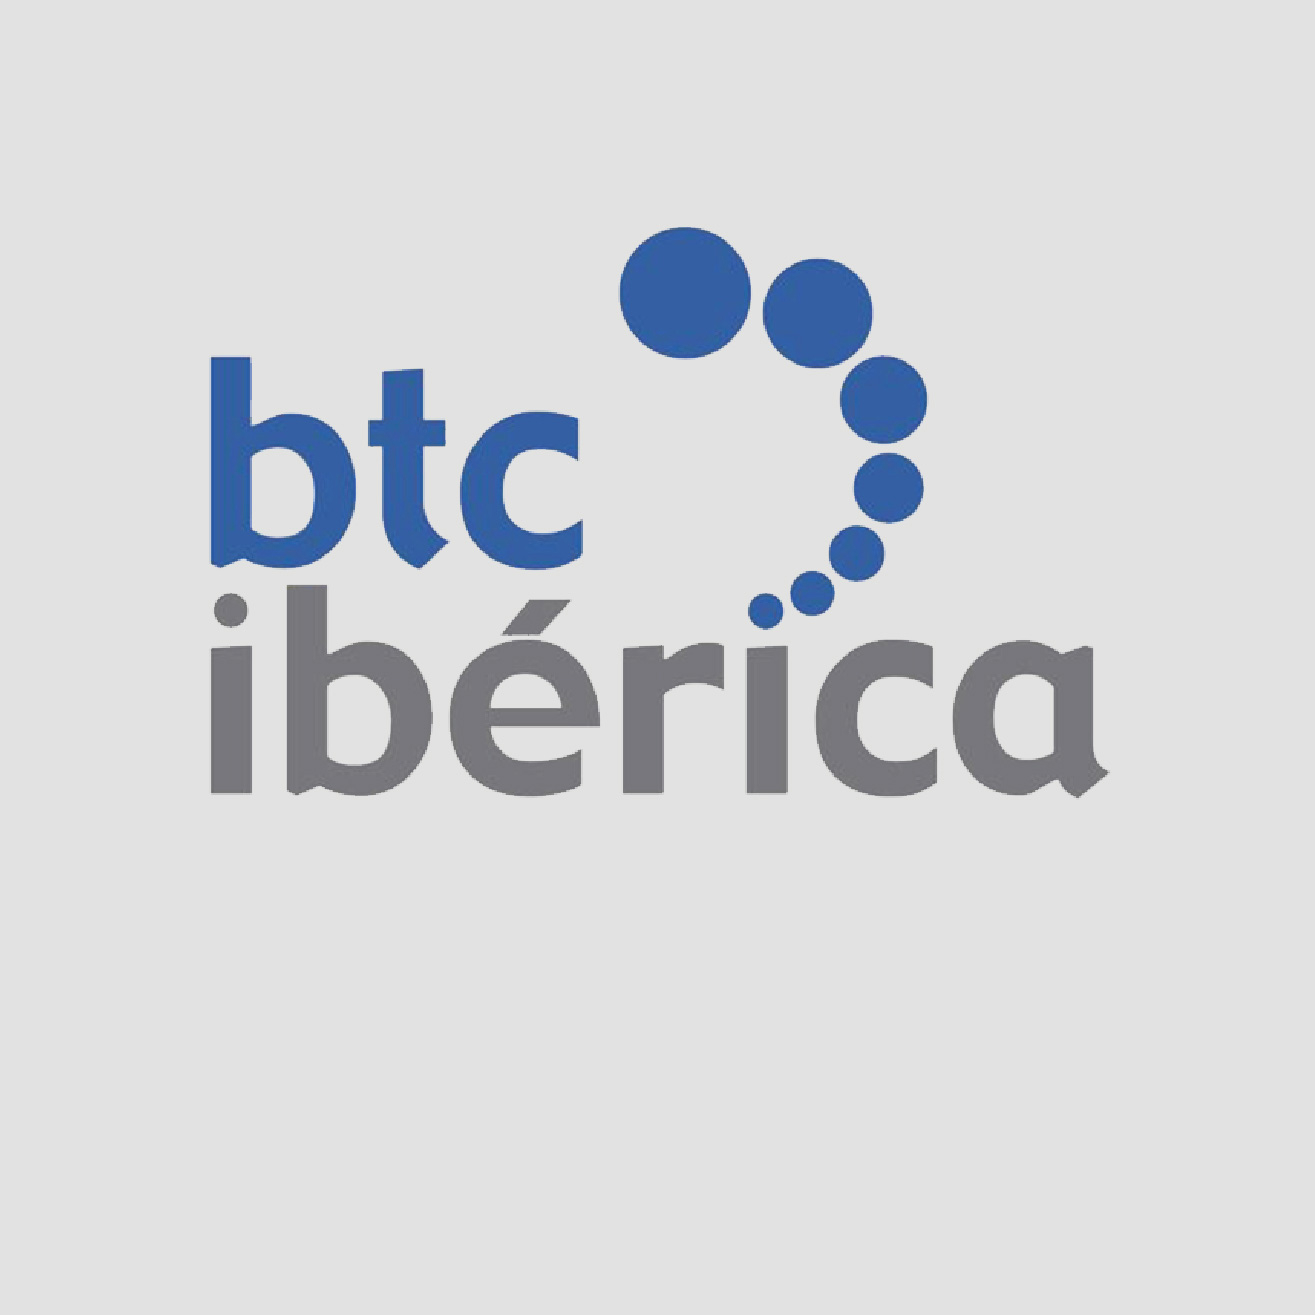 Btc iberica spain cryptocurrency penny stocks 2017